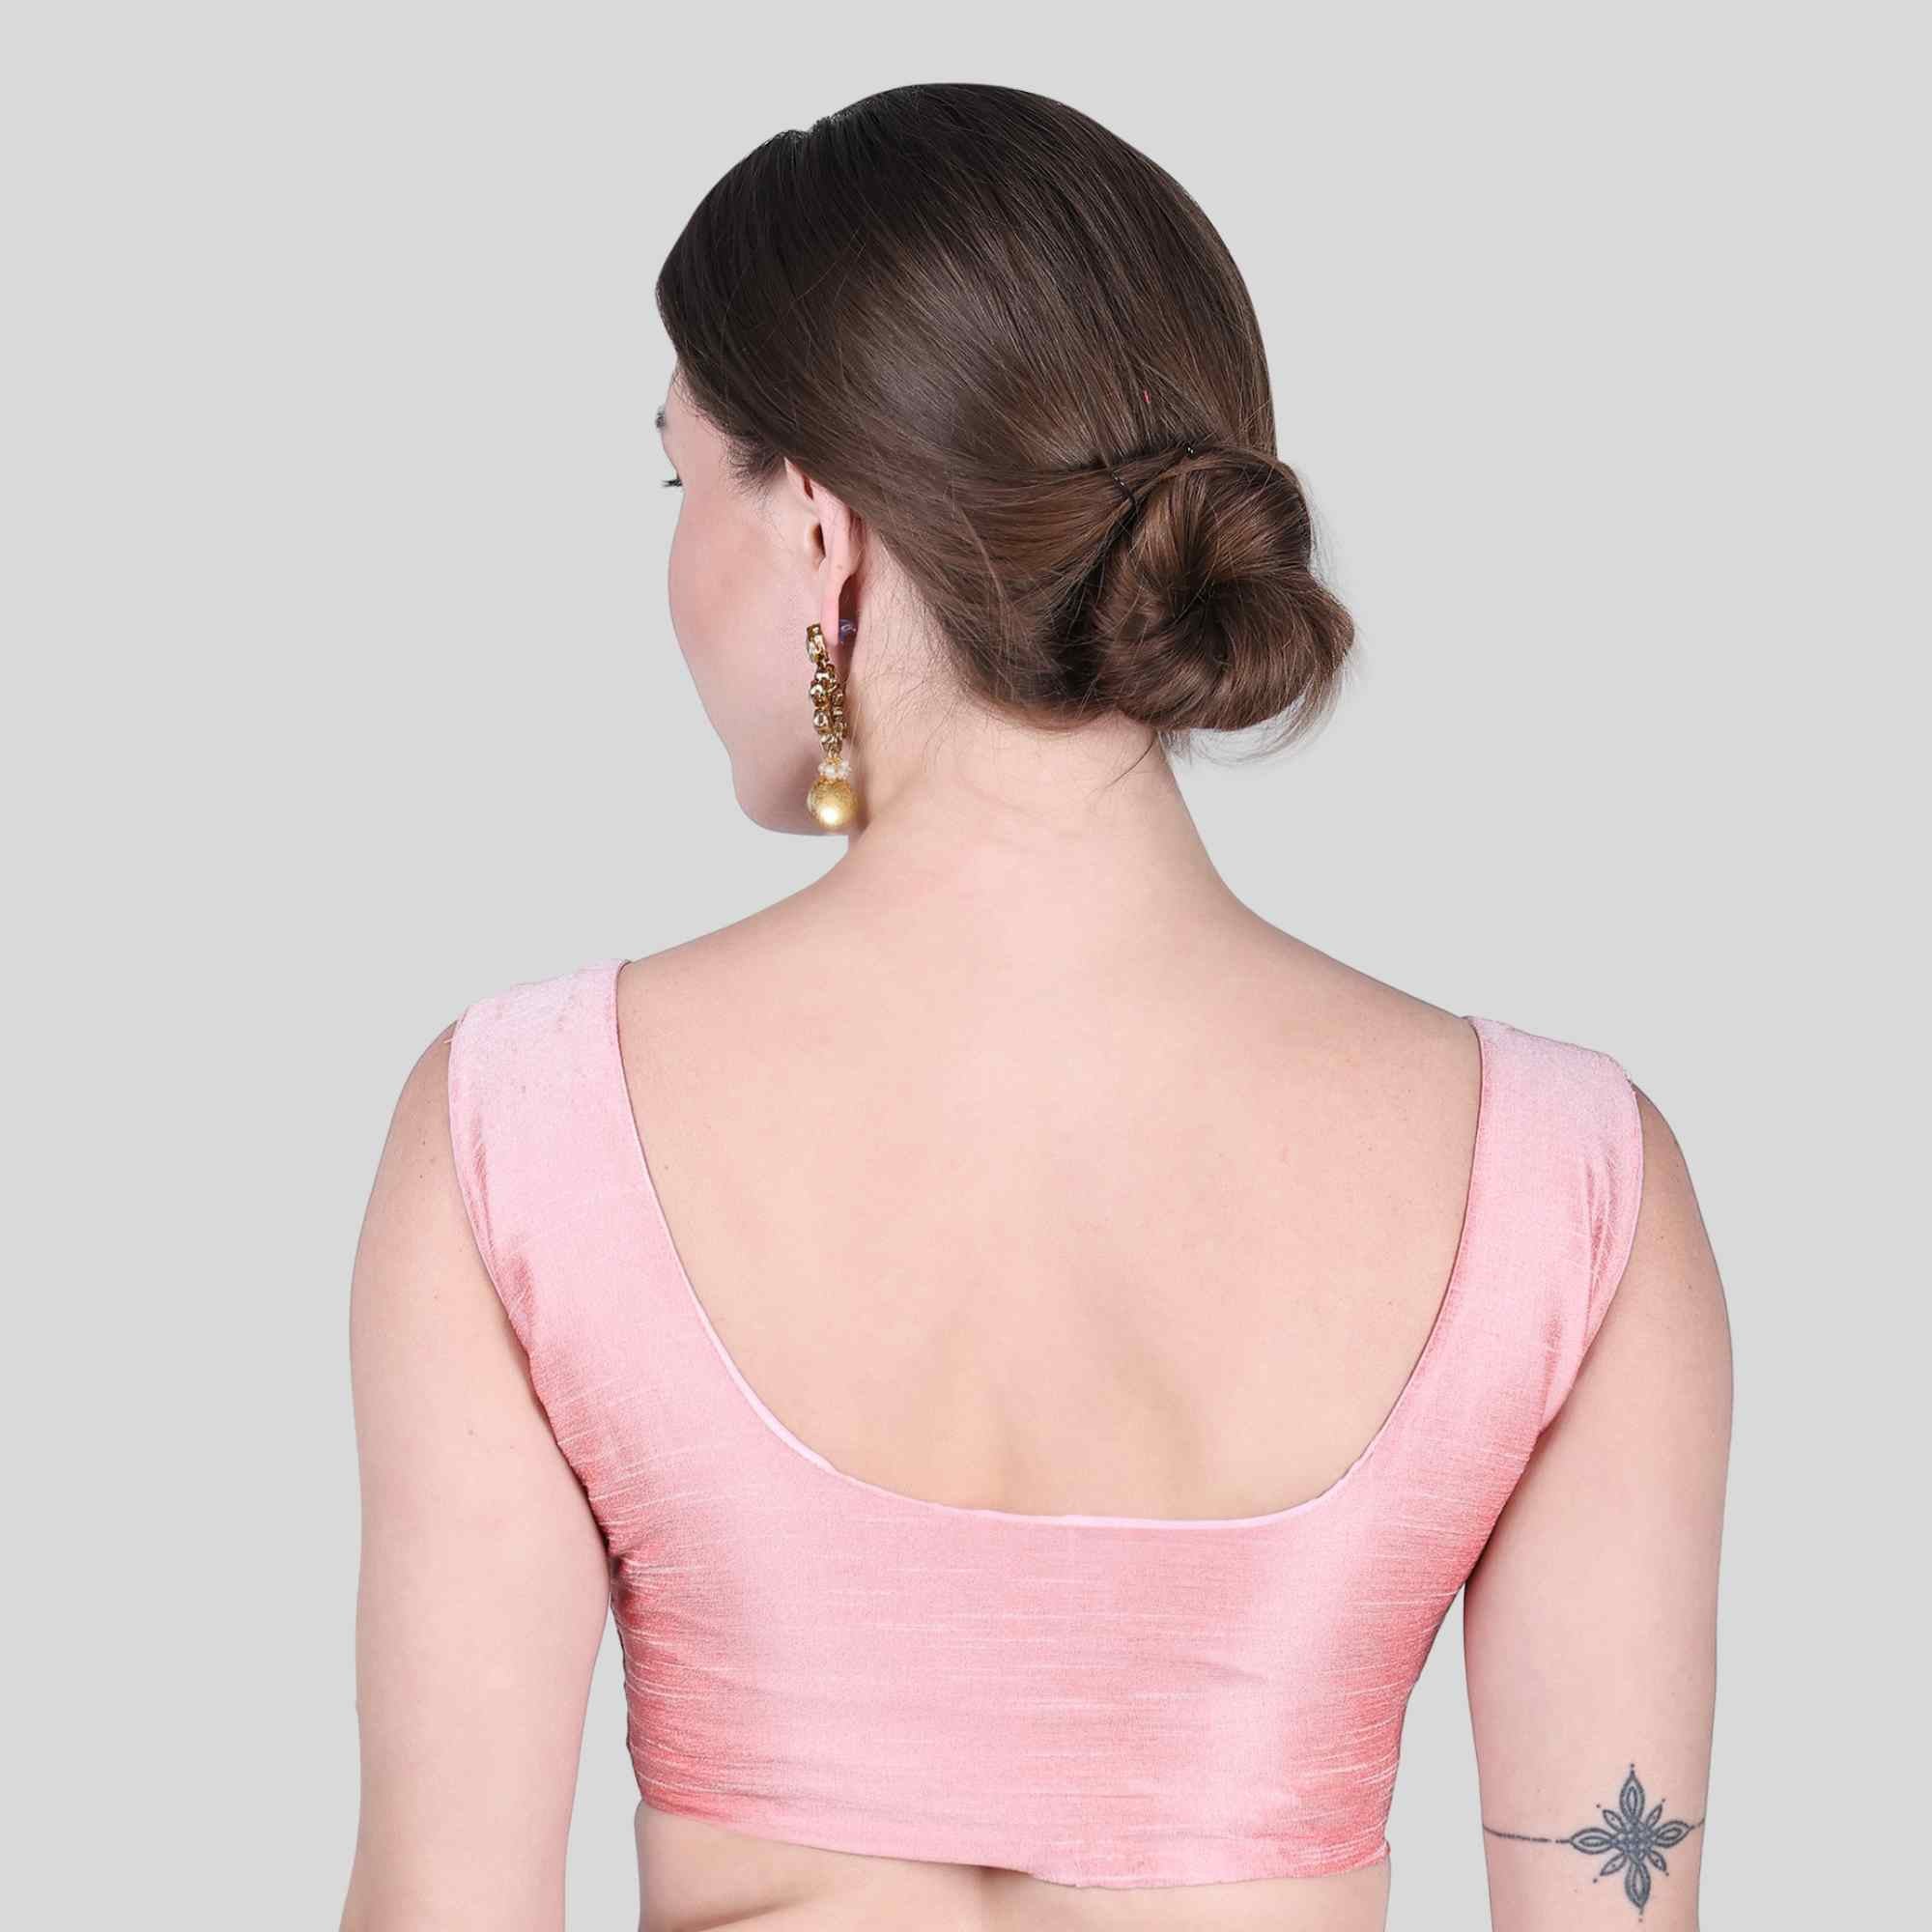 Sleeveless blouse with regular back neck